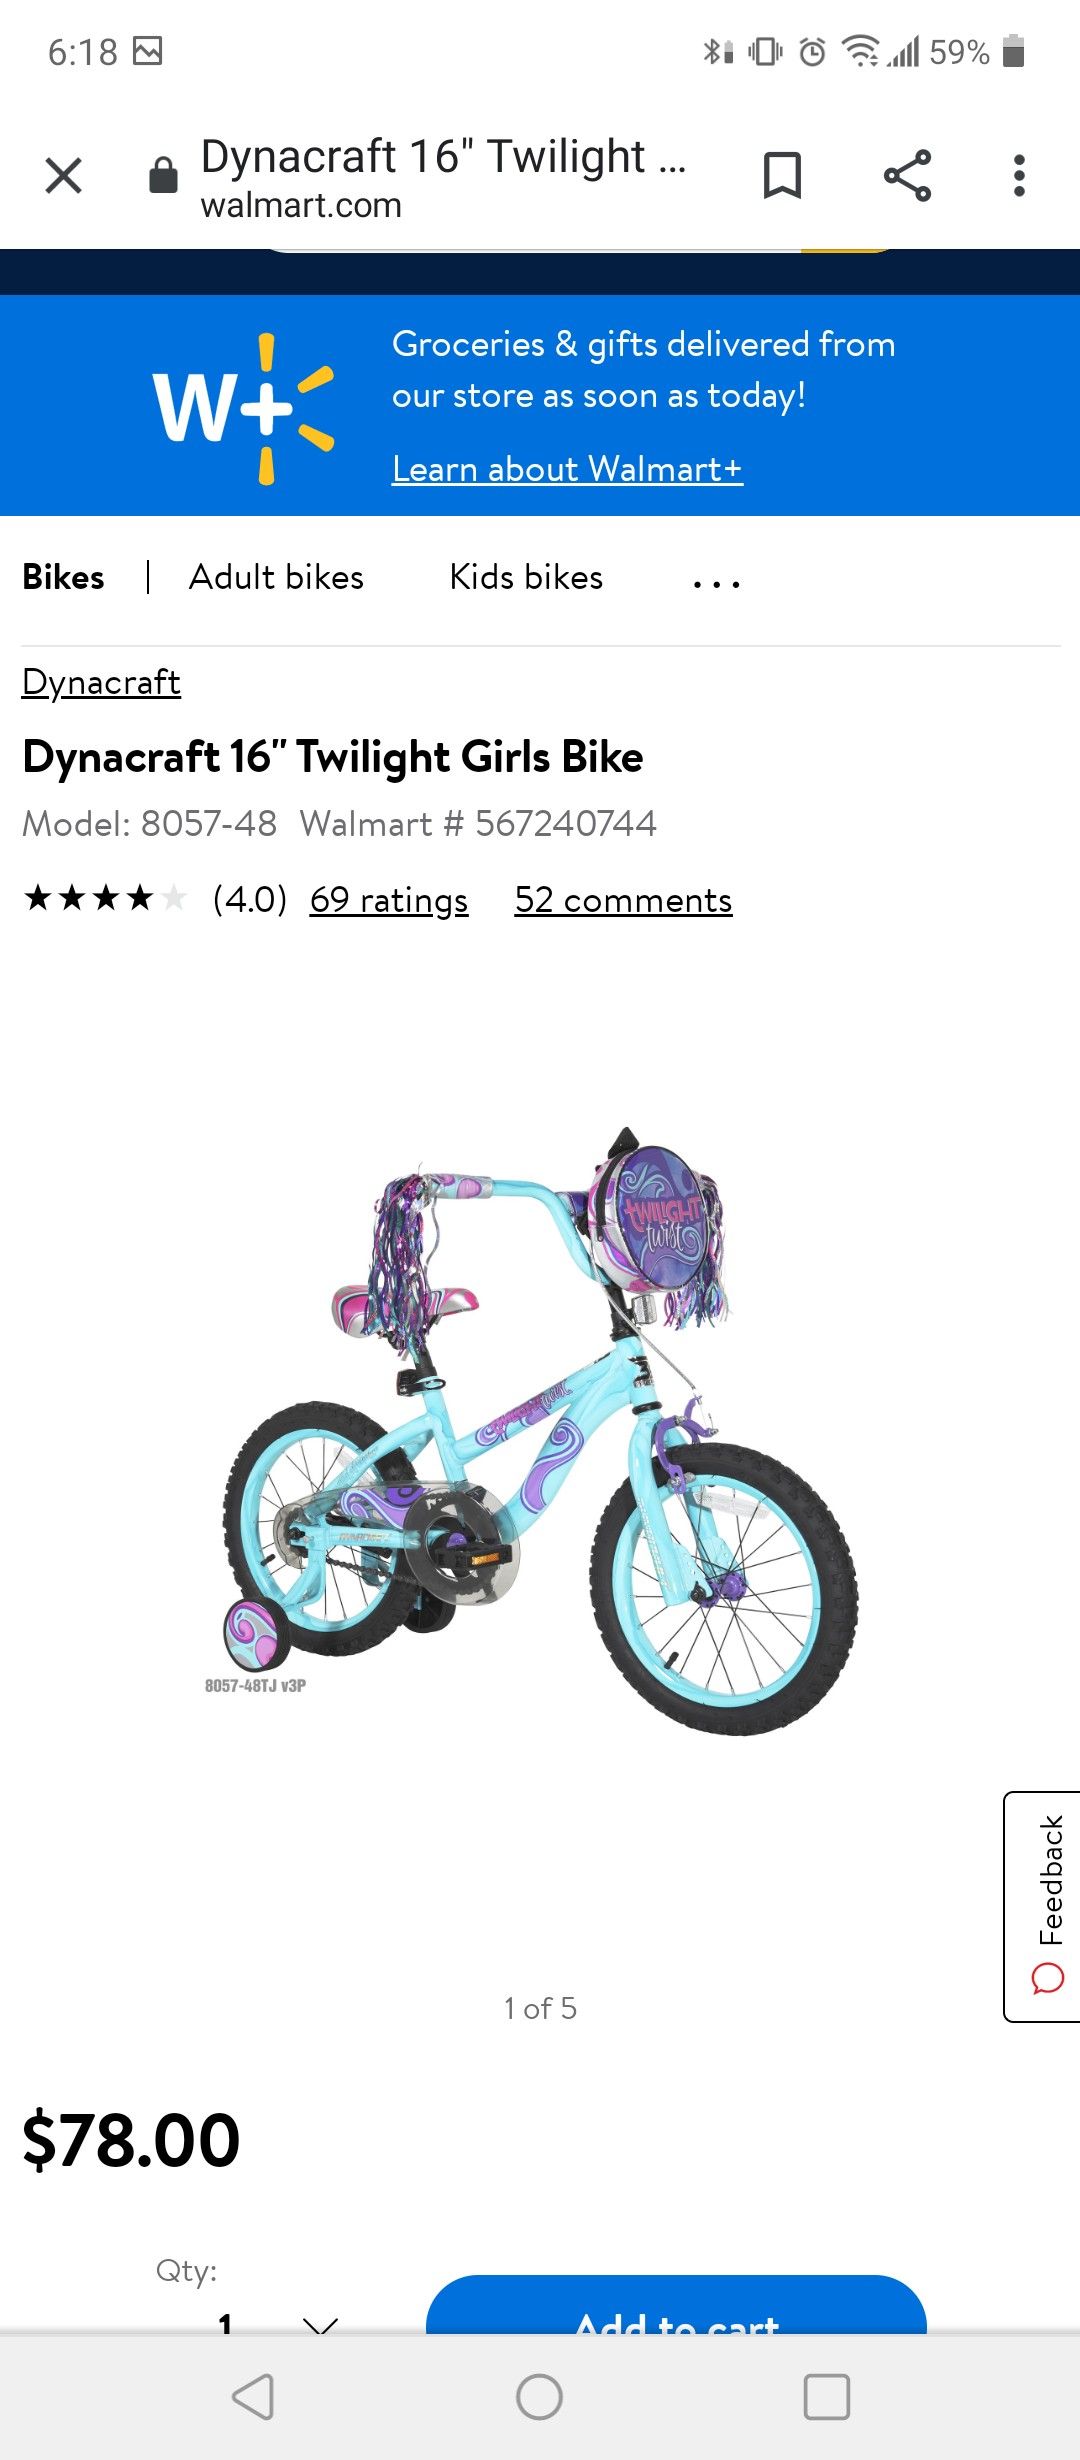 Dynacraft 16" Twilight Girls Bike